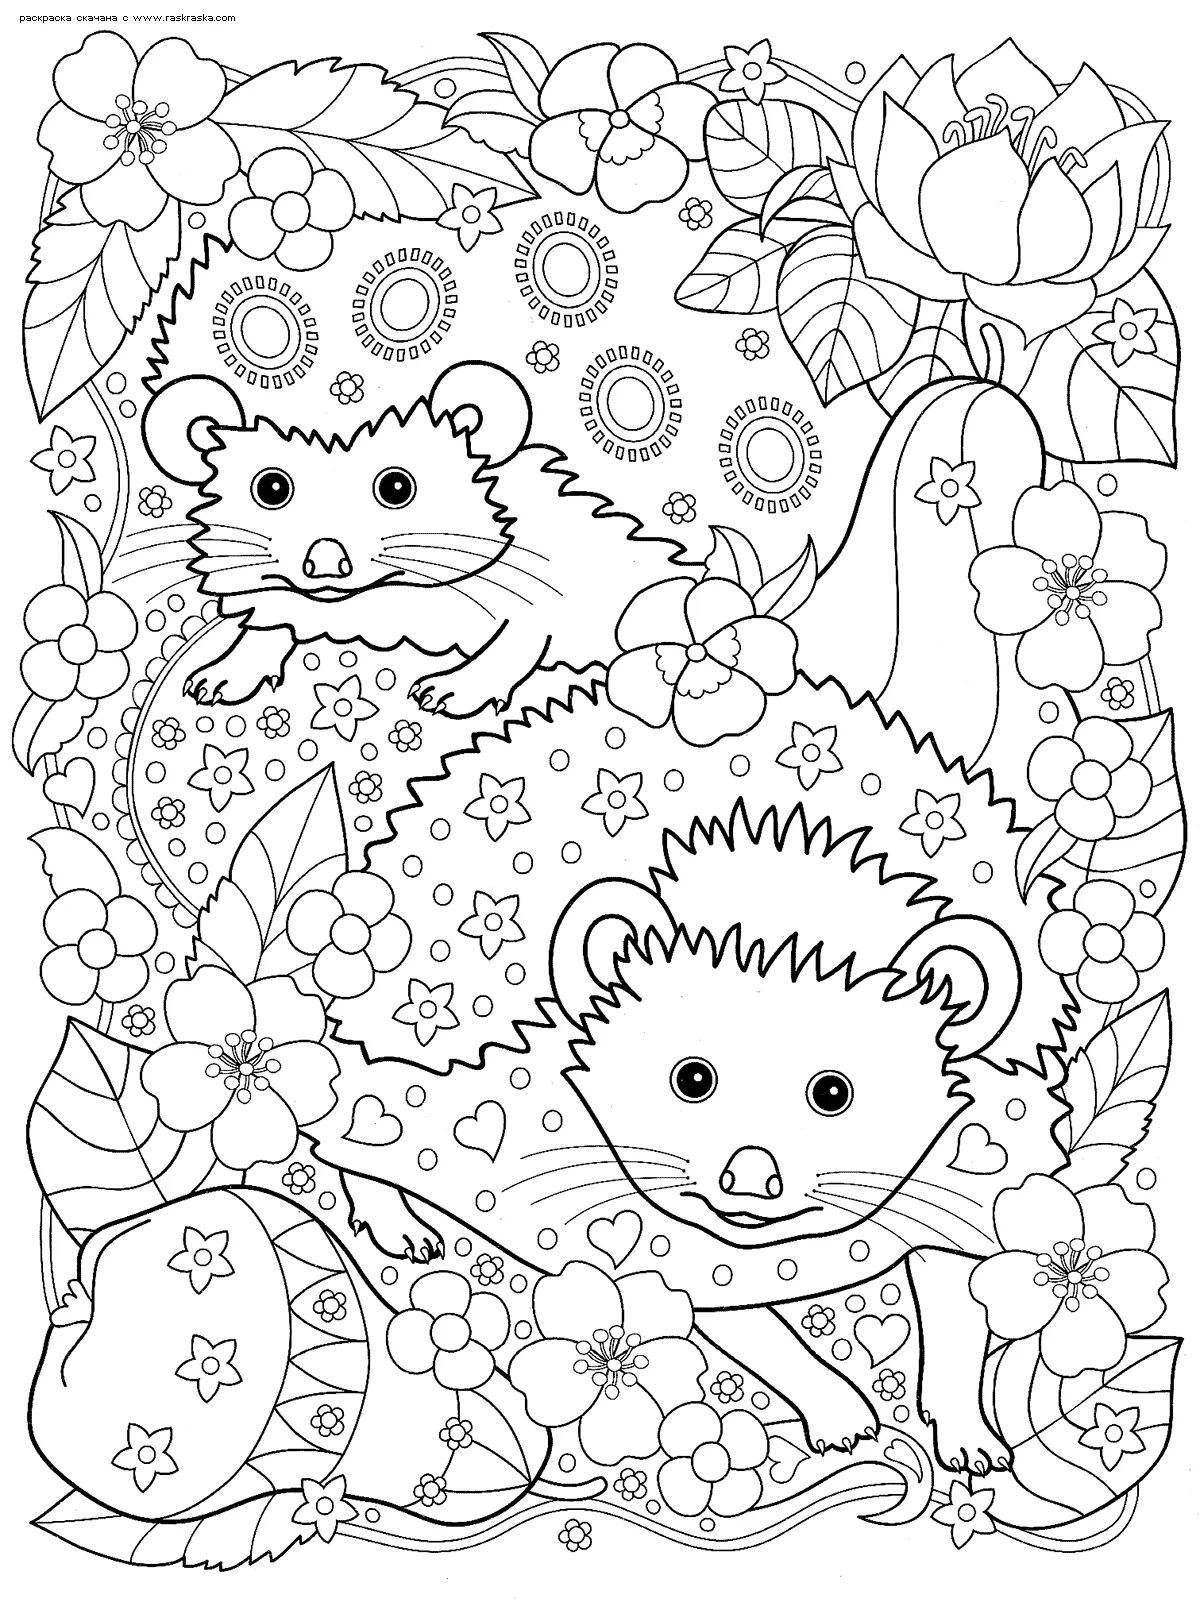 Coloring book funny anti-stress hedgehog